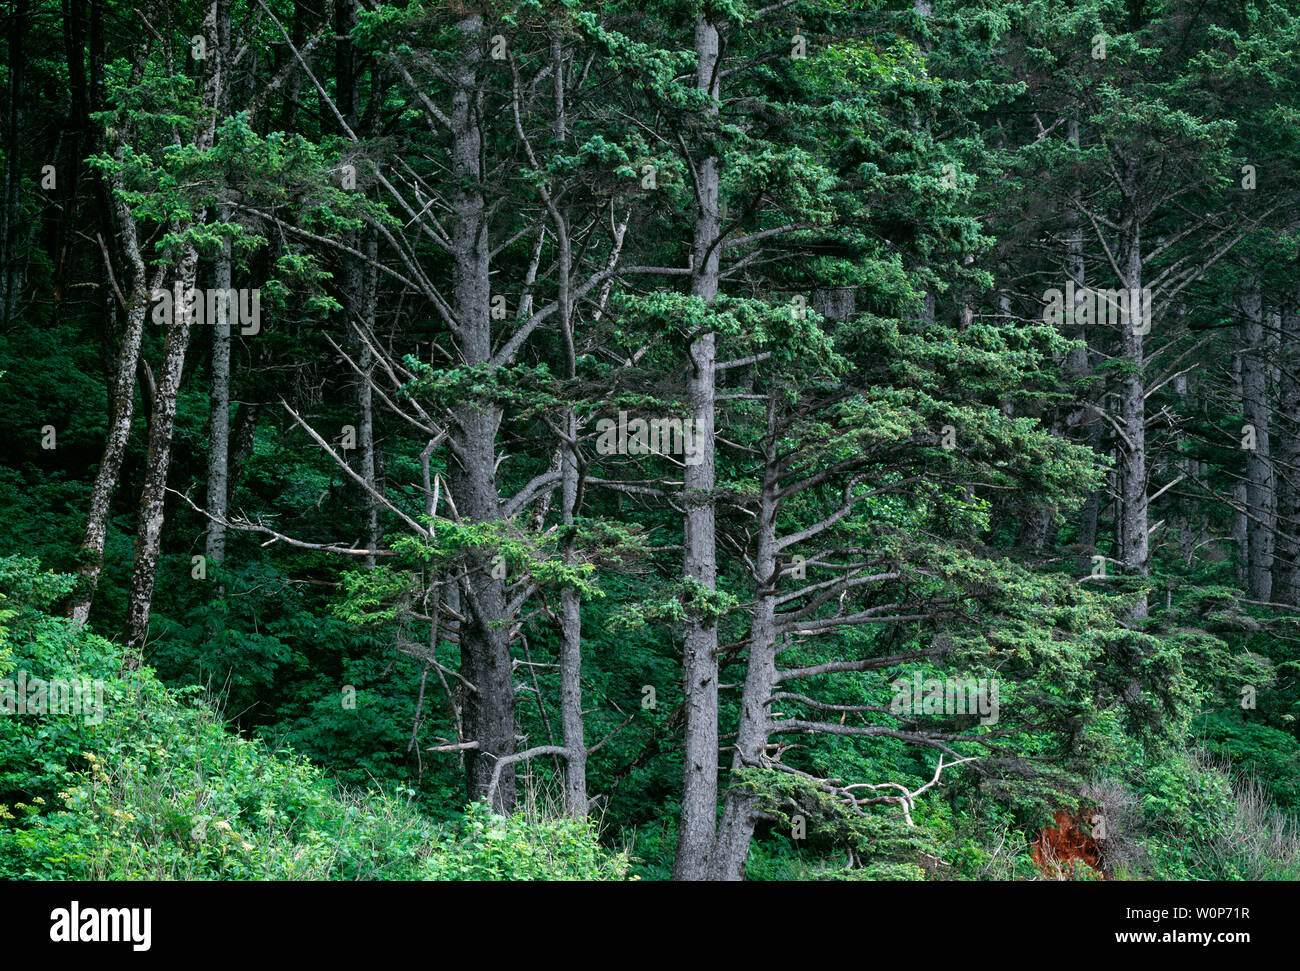 USA, Washington, Olympic National Park, Seaside coastal forest of Sitka spruce grows along shoreline at Rialto Beach. Stock Photo